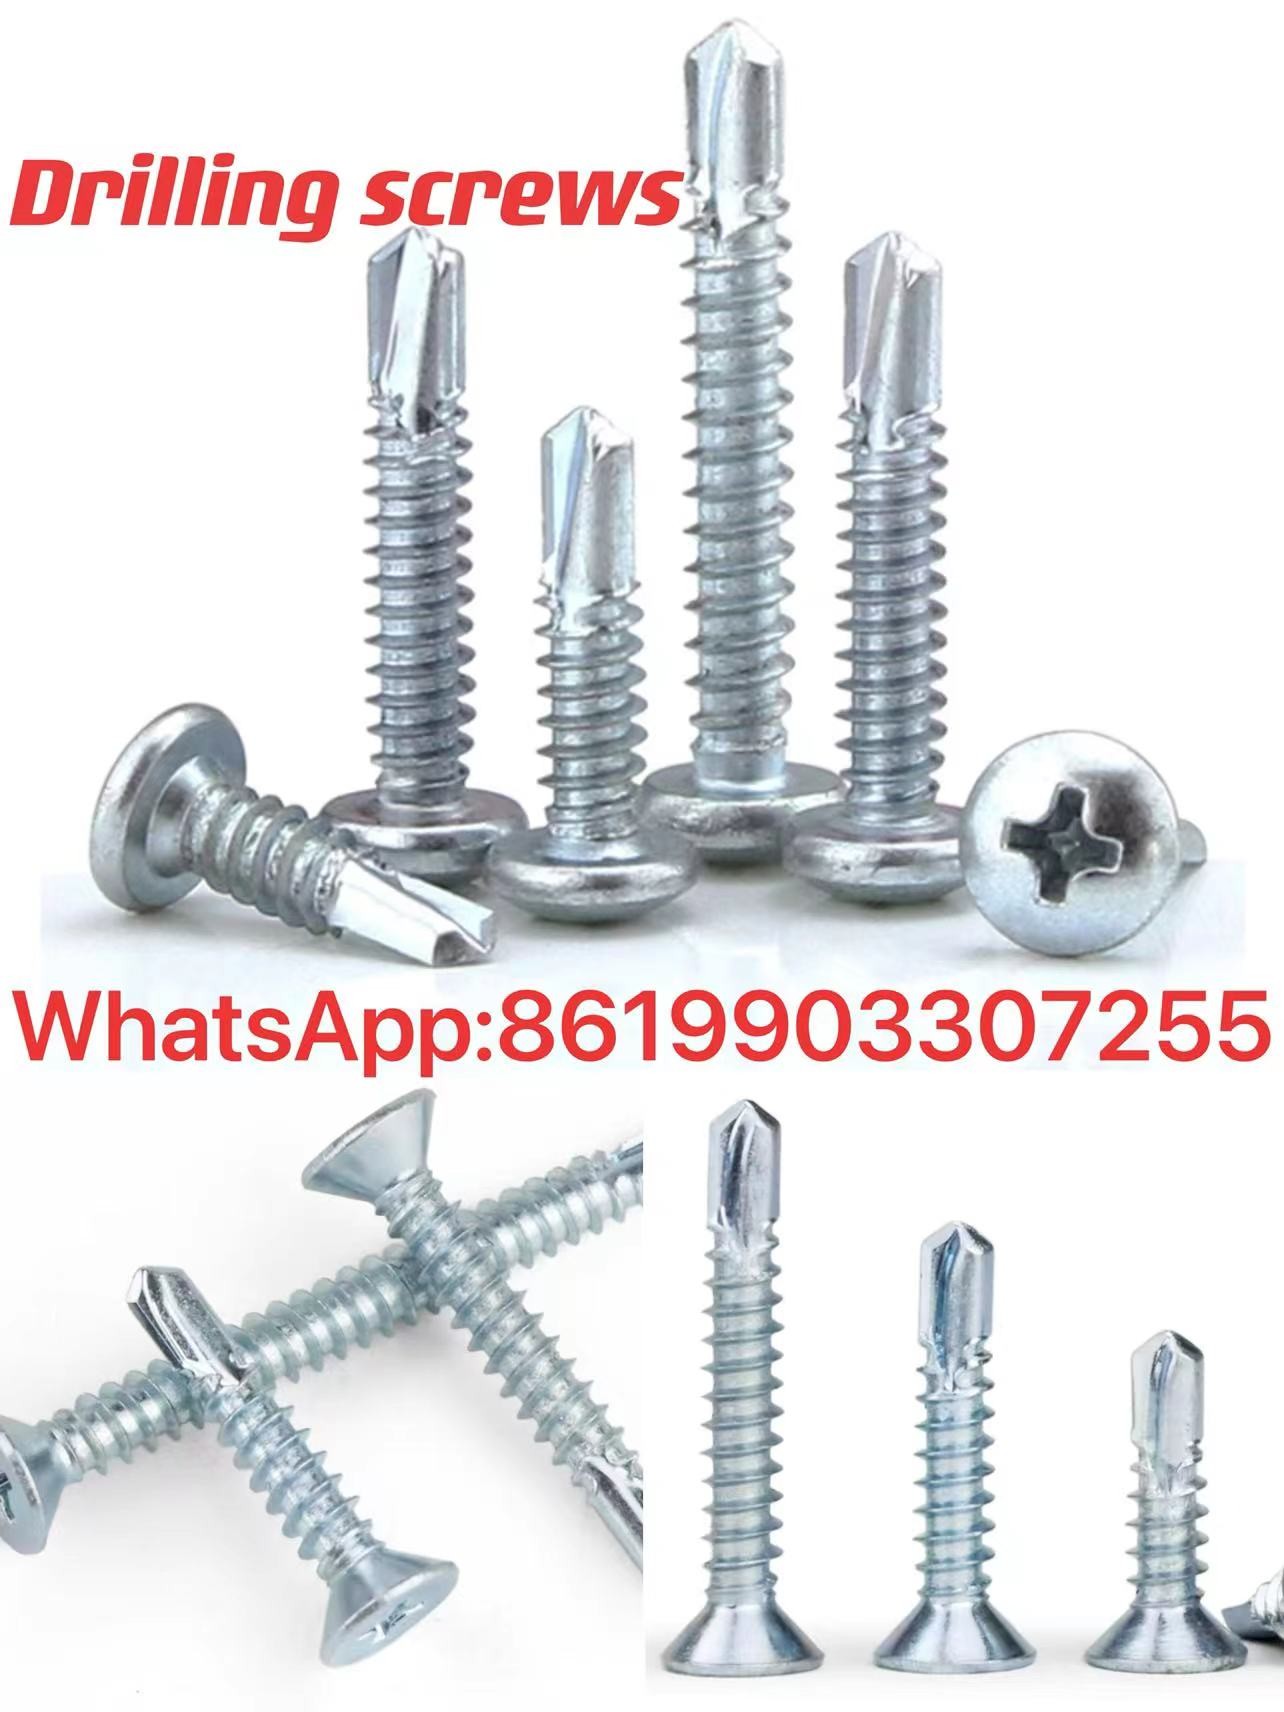 factory sales drillling screws WhatsApp:8619903307255-pic_1